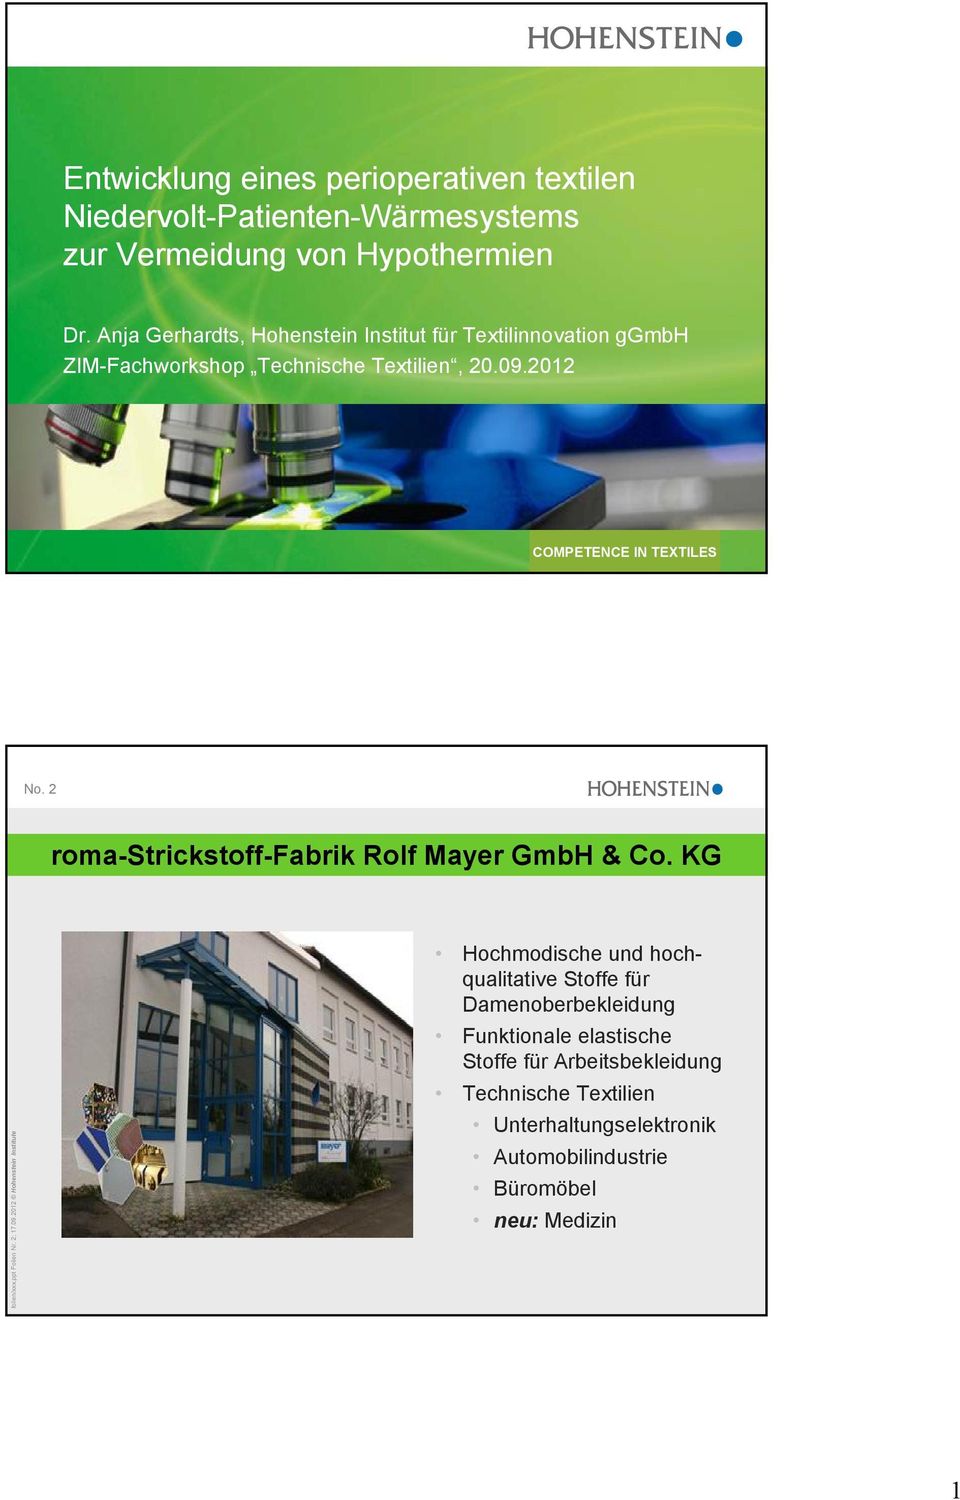 2 roma-strickstoff-fabrik Rolf Mayer GmbH & Co. KG folien/xxx.ppt Folien Nr. 2; 17.09.